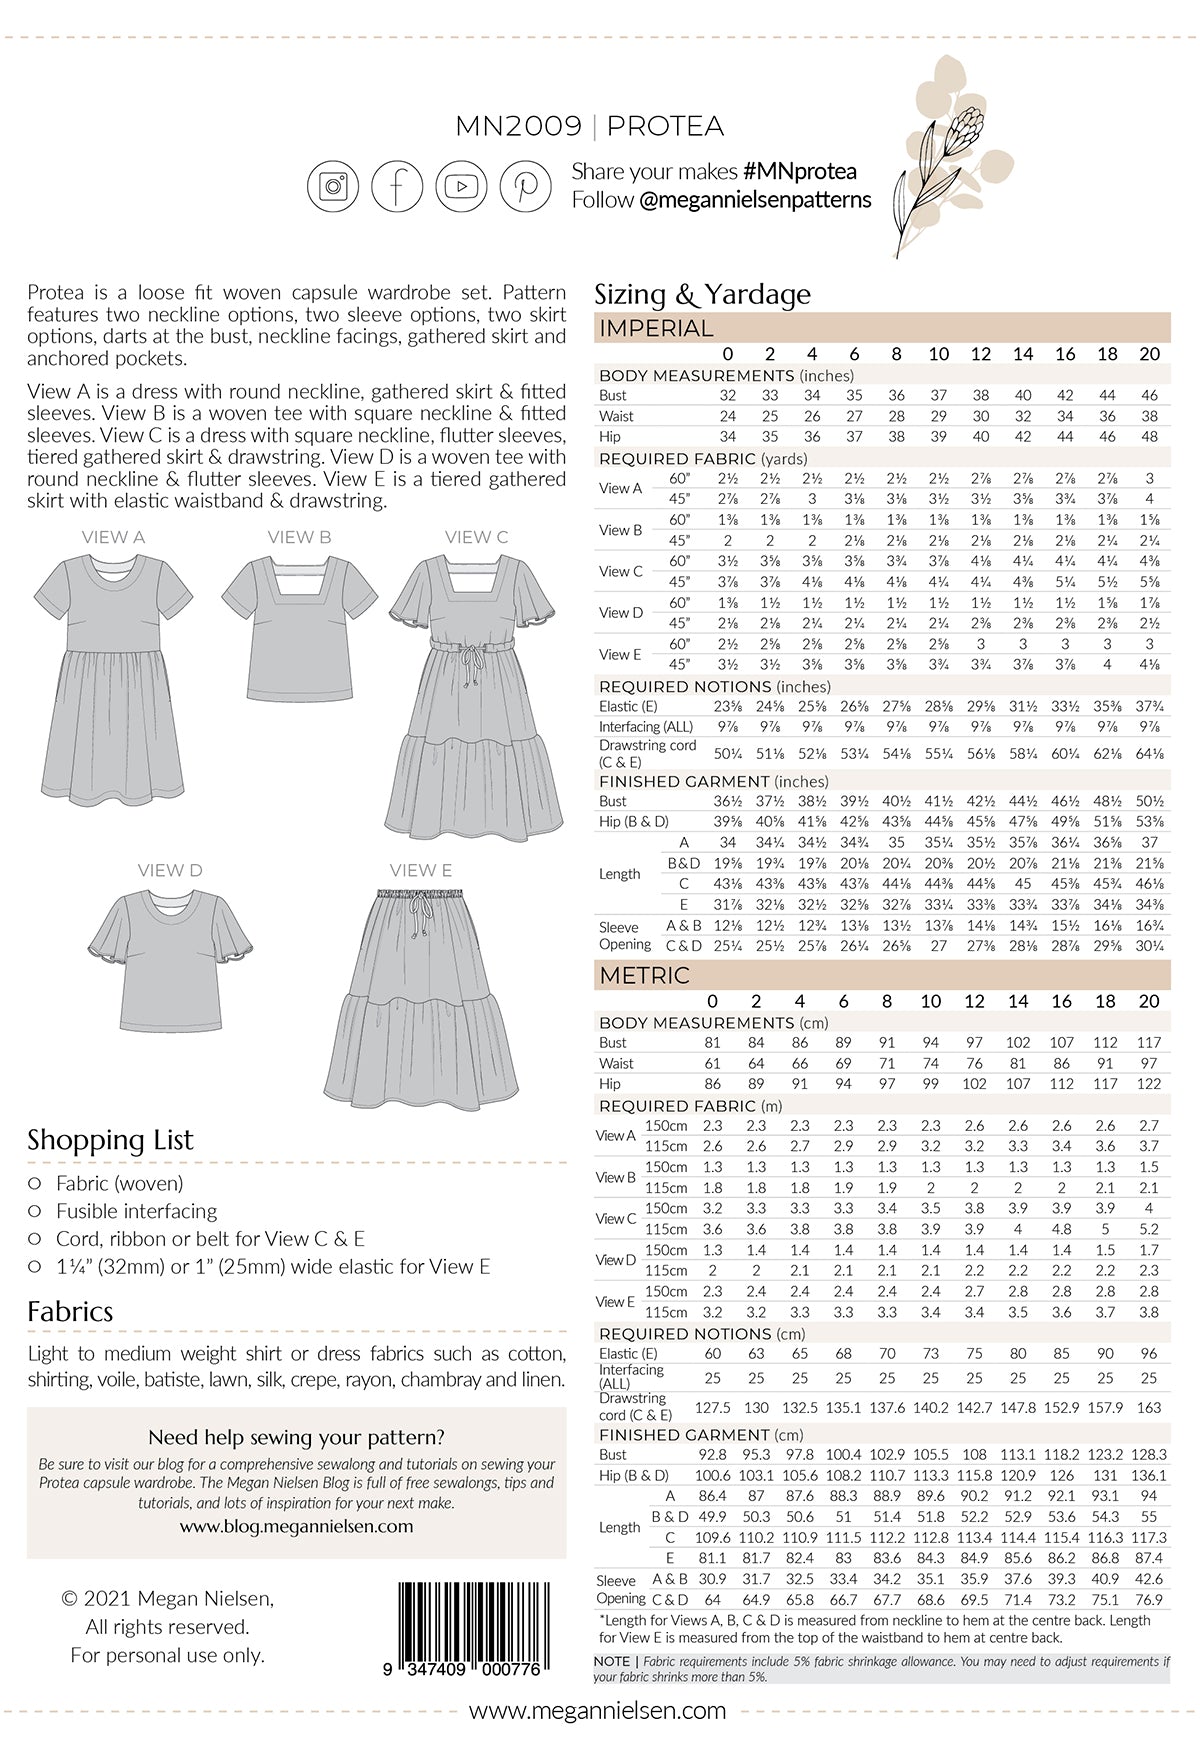 Protea Capsule Wardrobe Set by Megan Nielsen